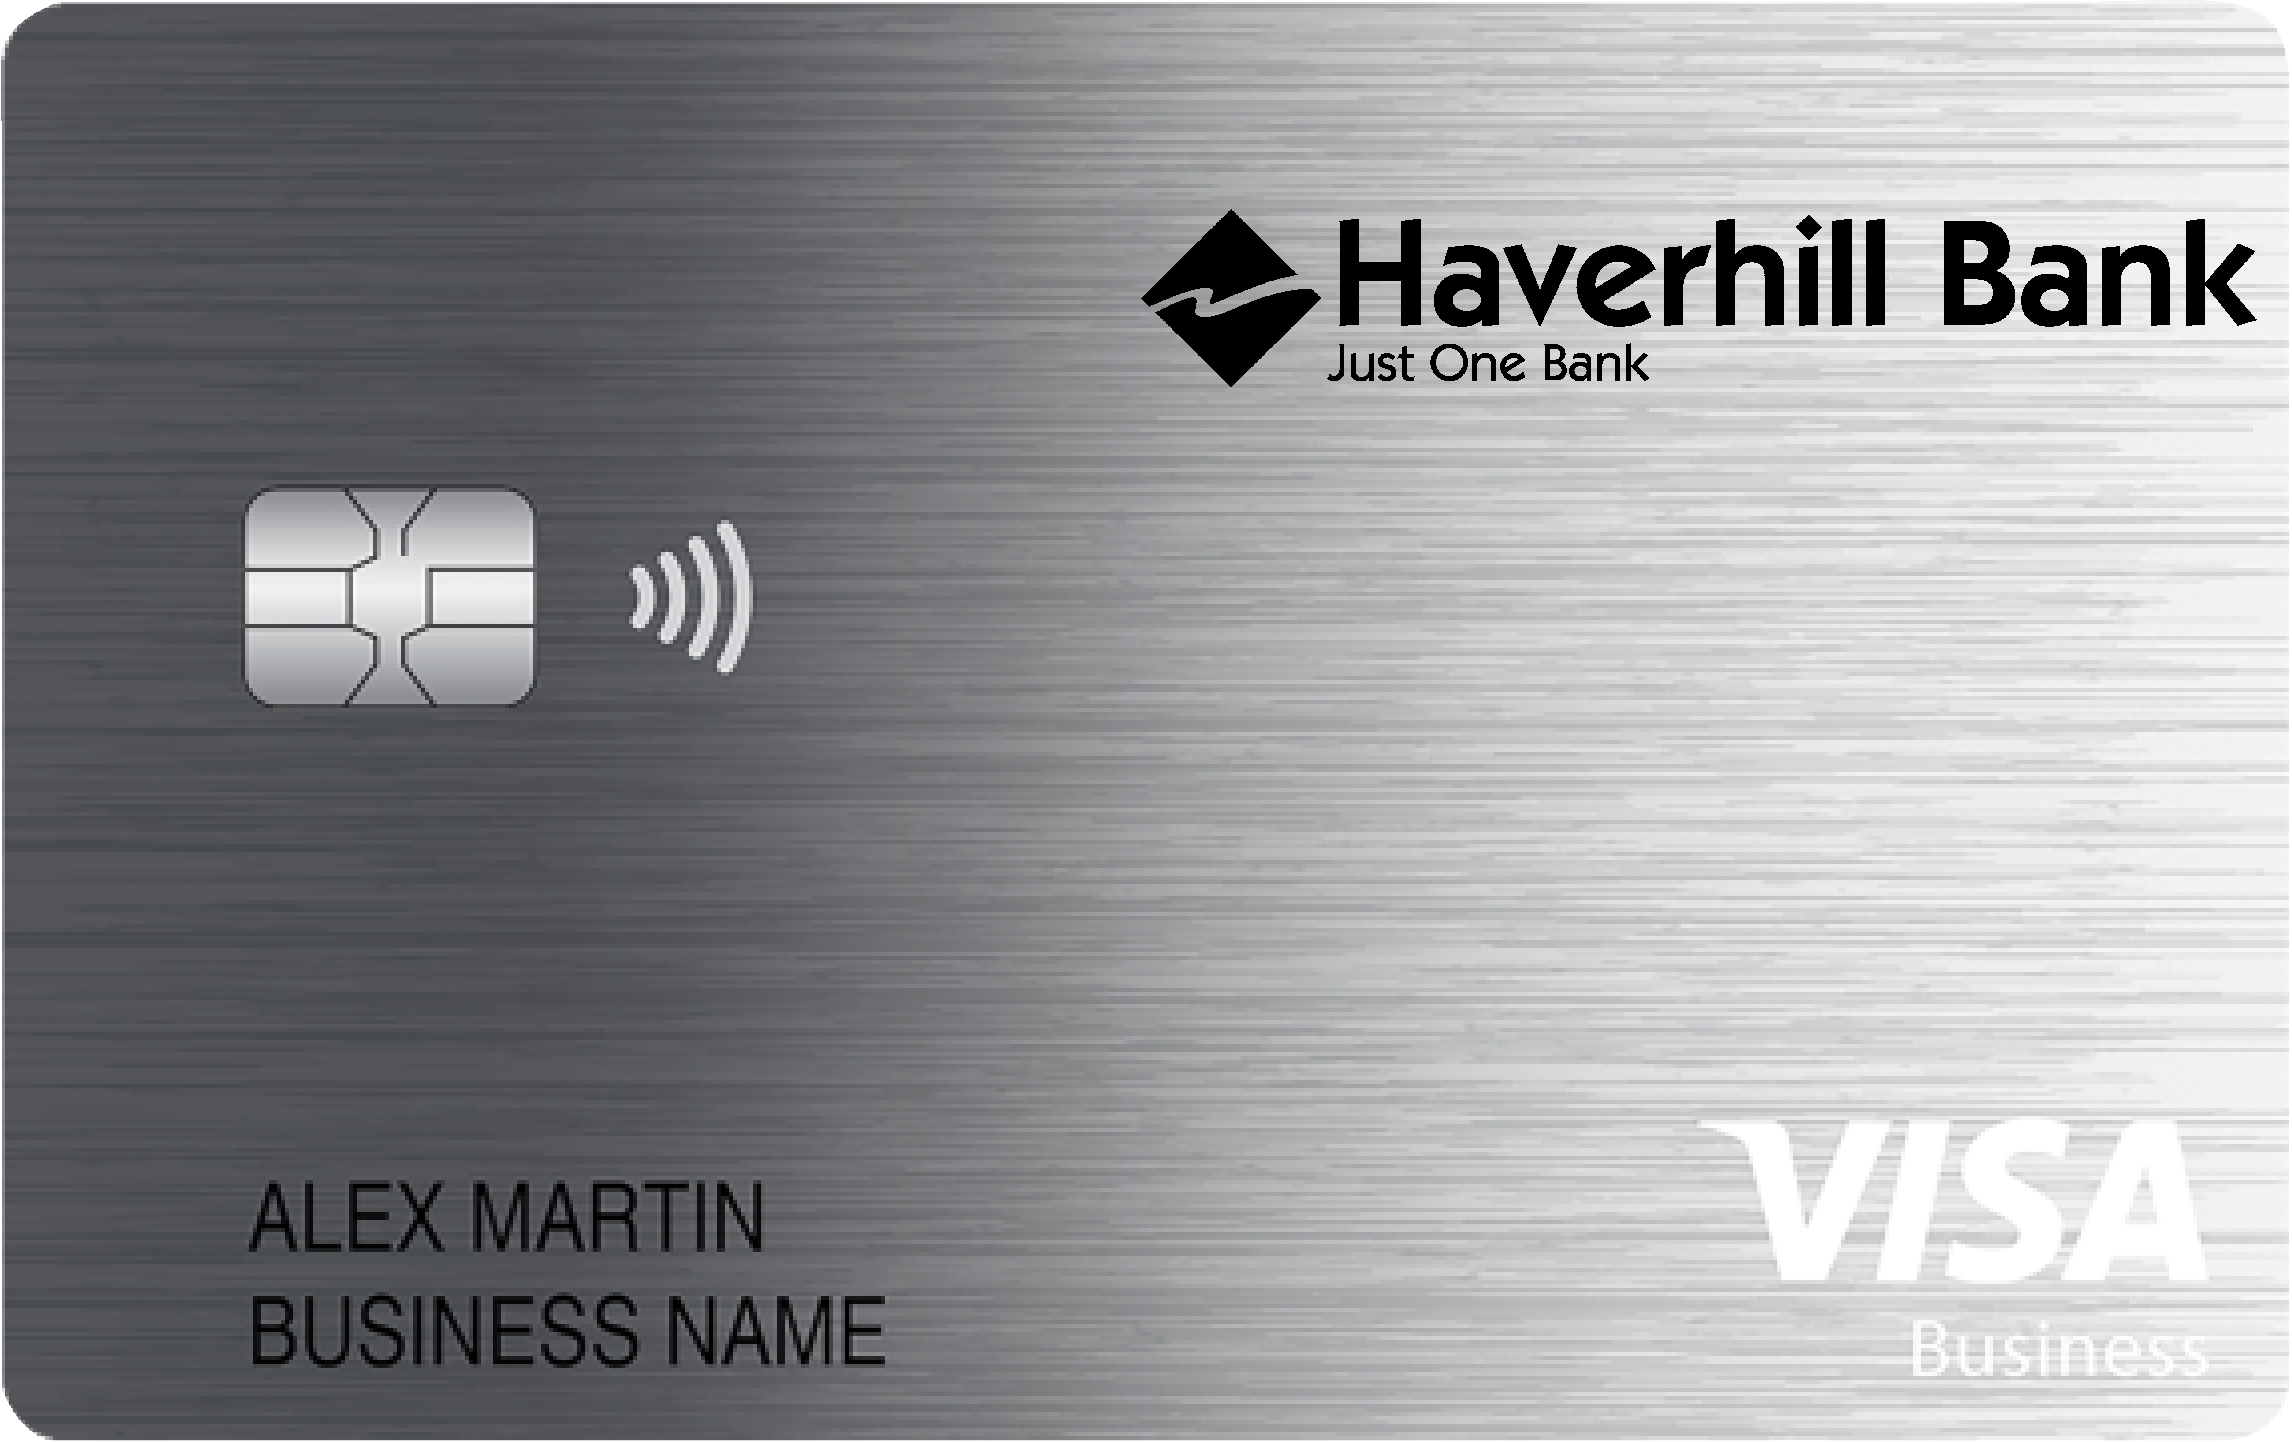 Haverhill Bank